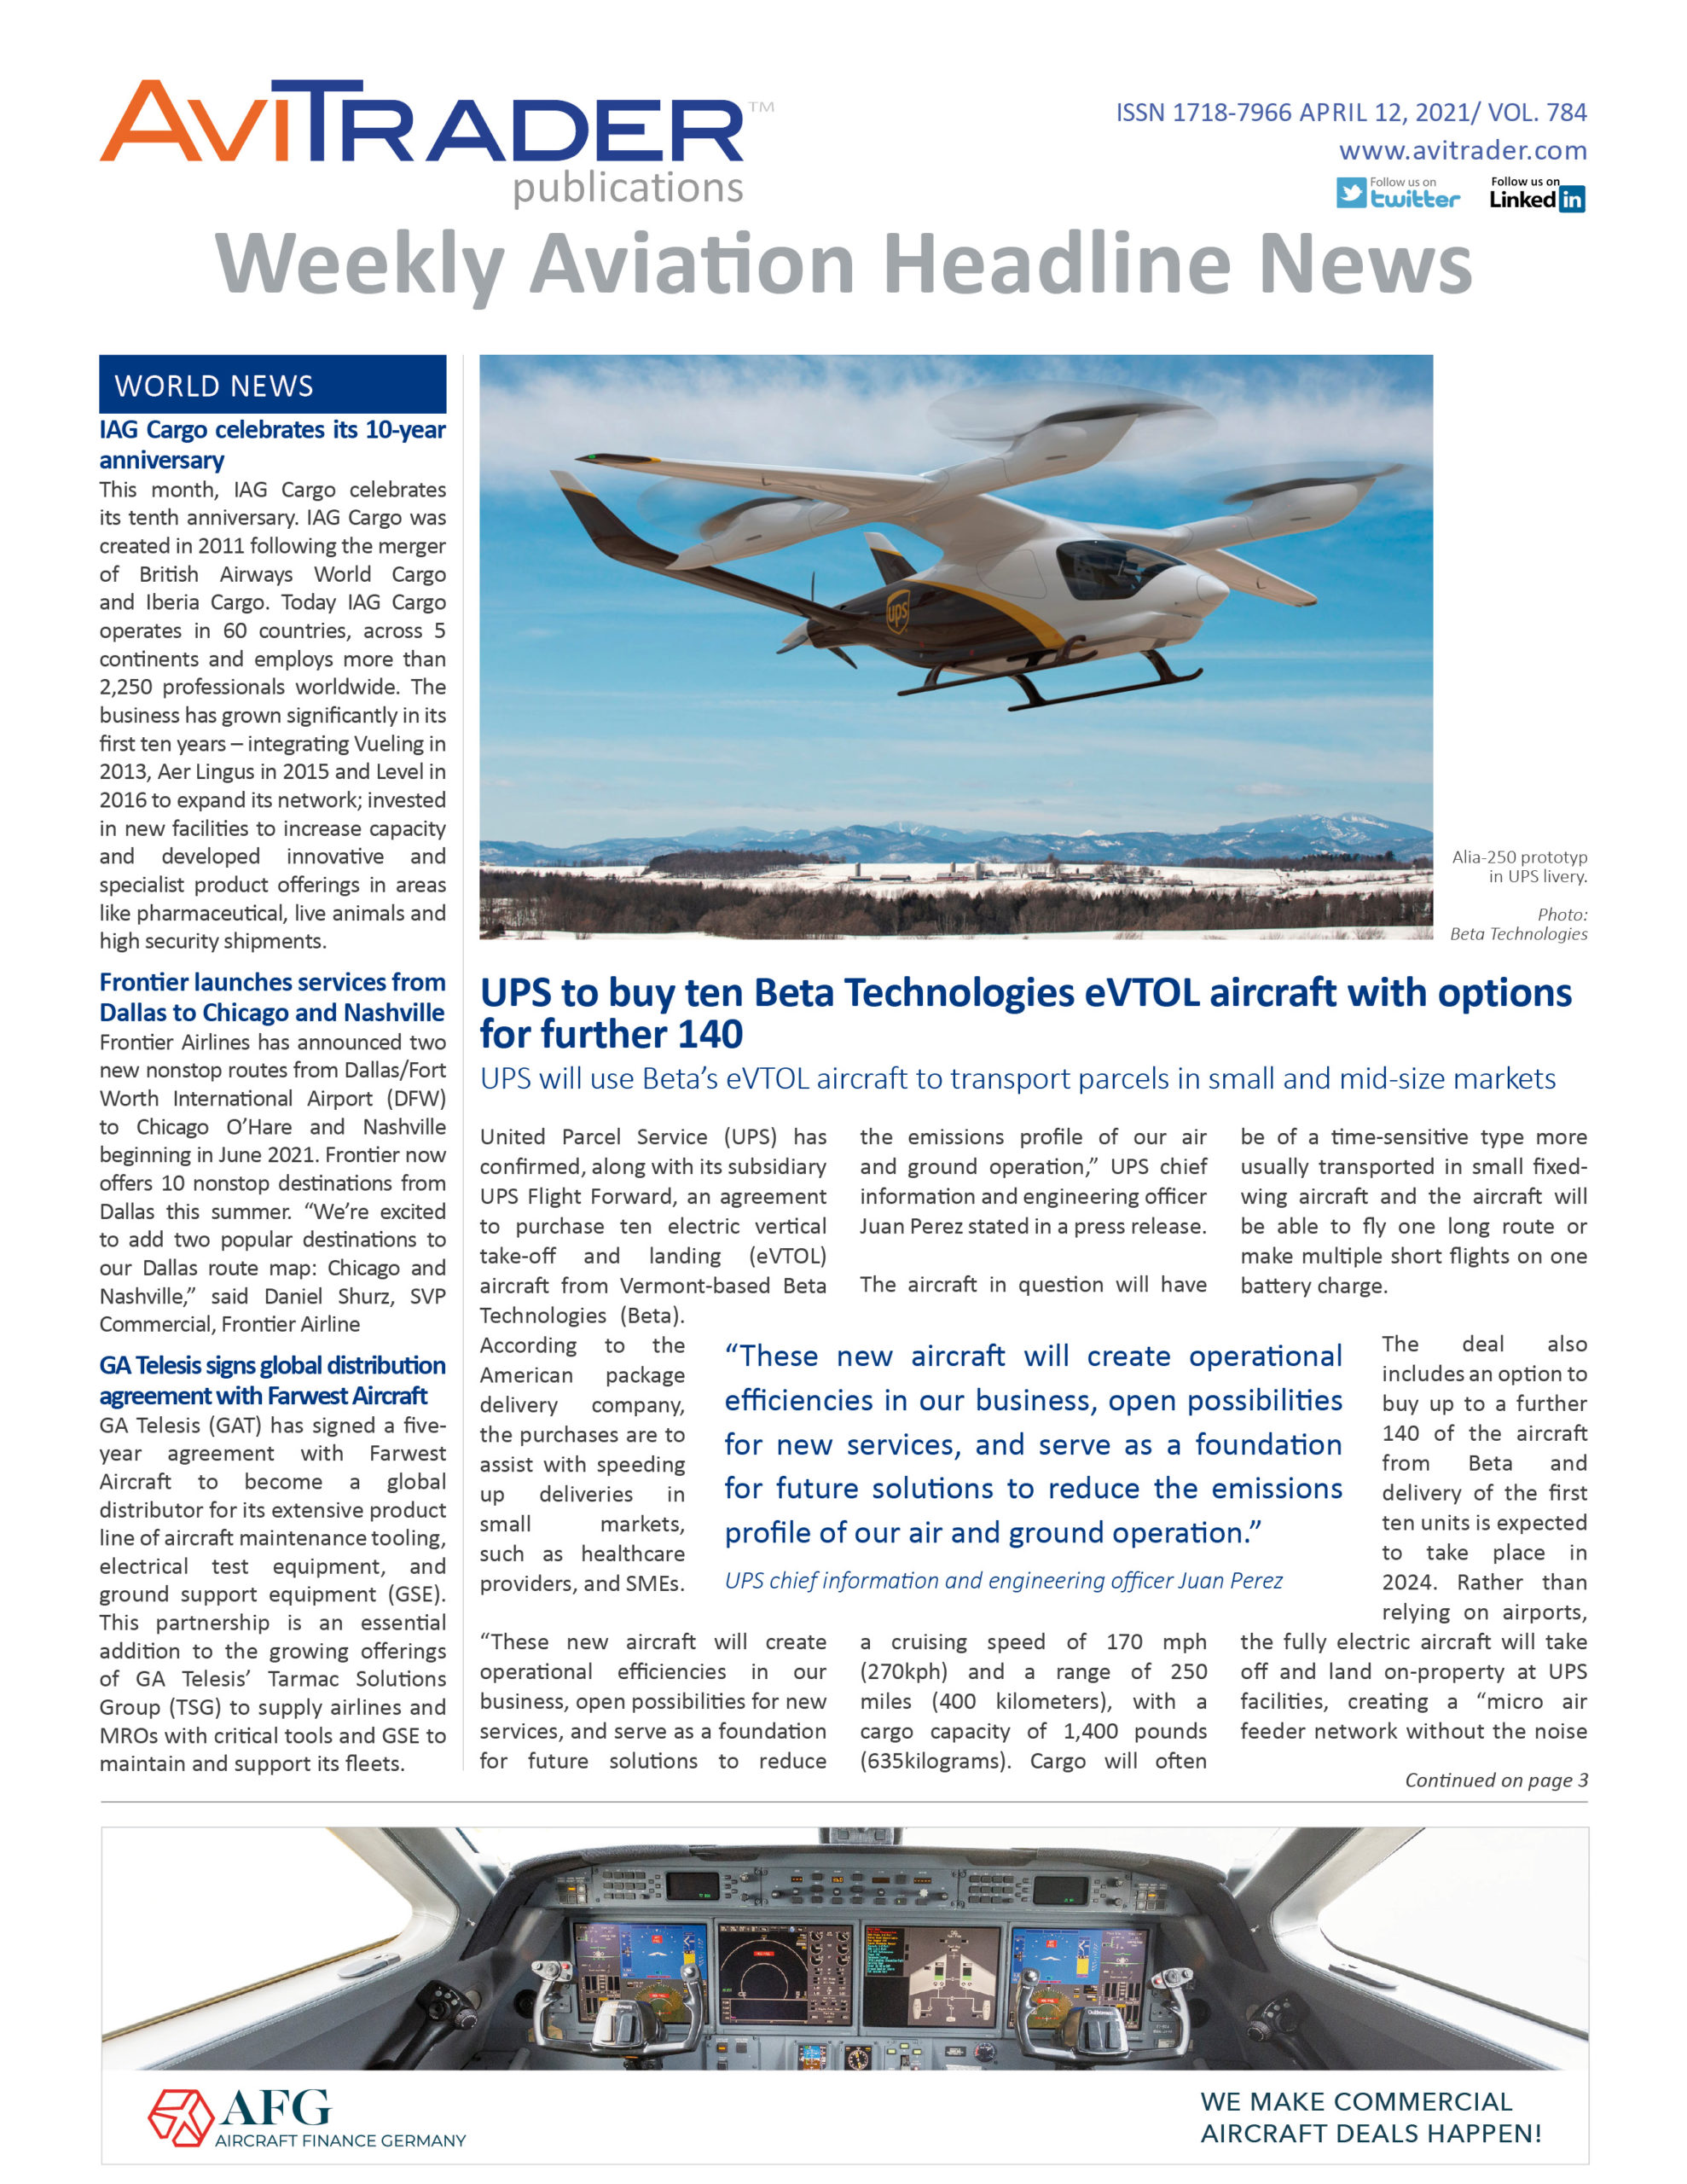 AviTrader_Weekly_Headline_News_Cover_2021-04-12